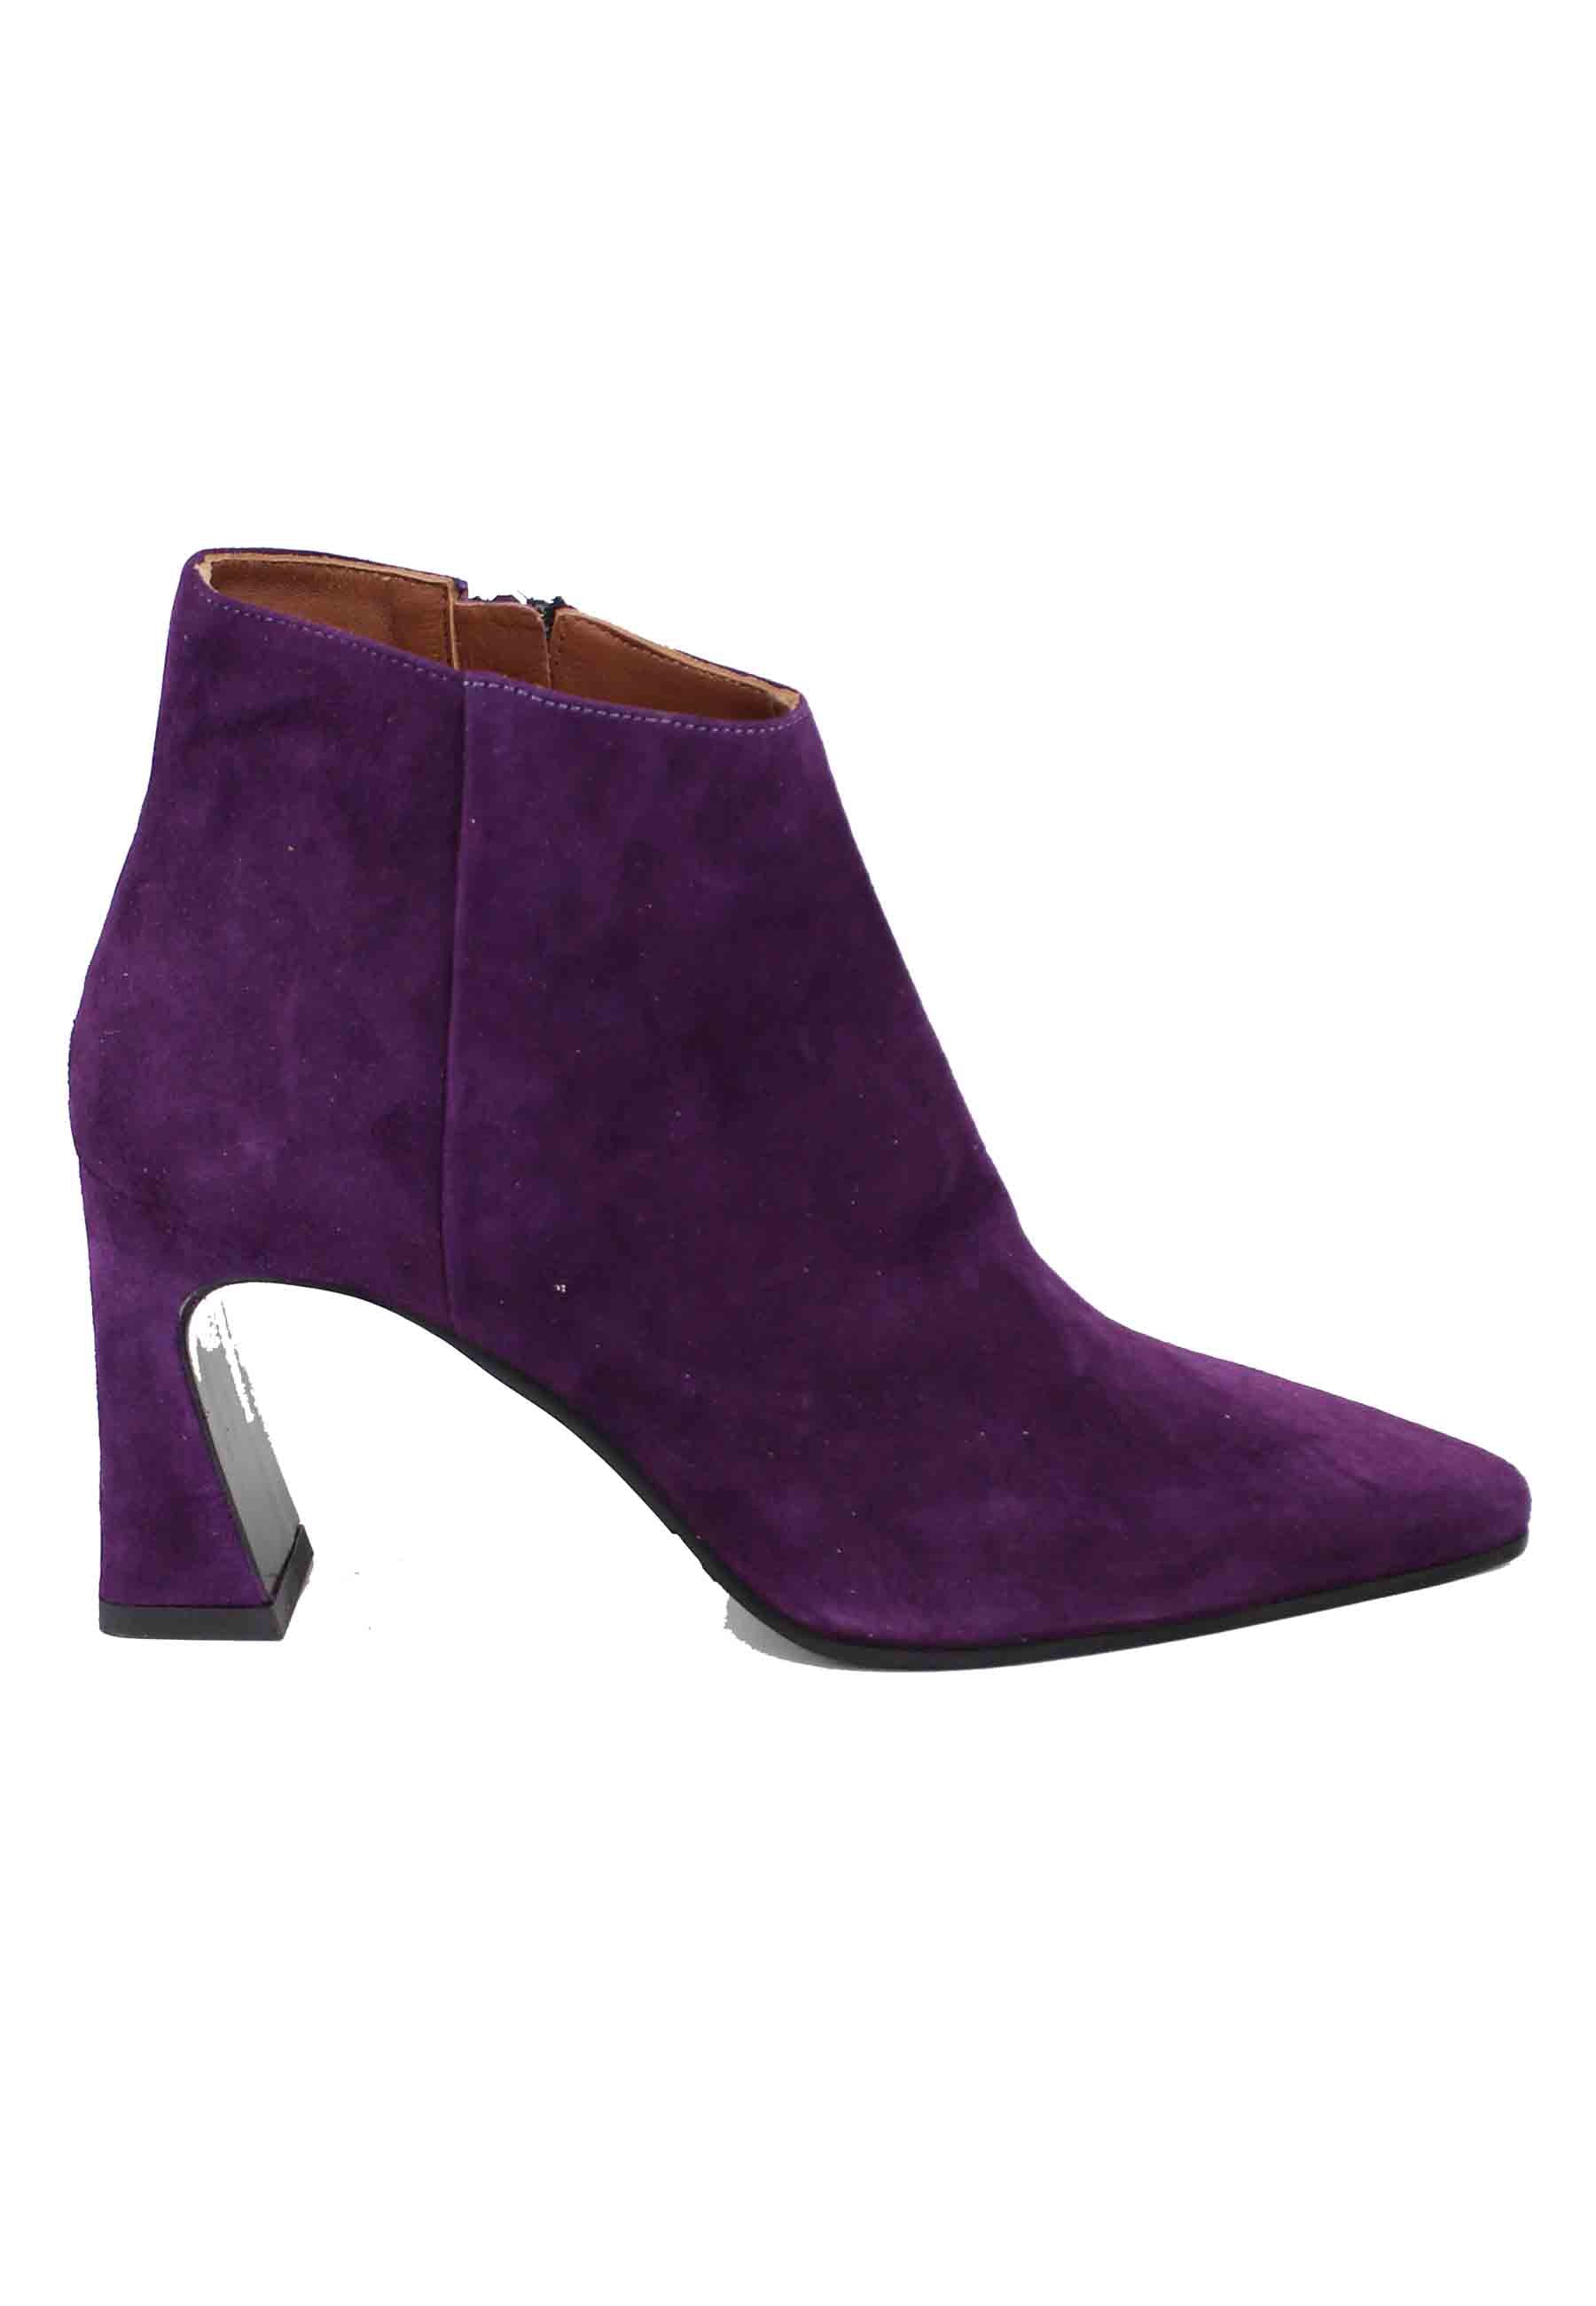 Women's ankle boots in purple suede high heel